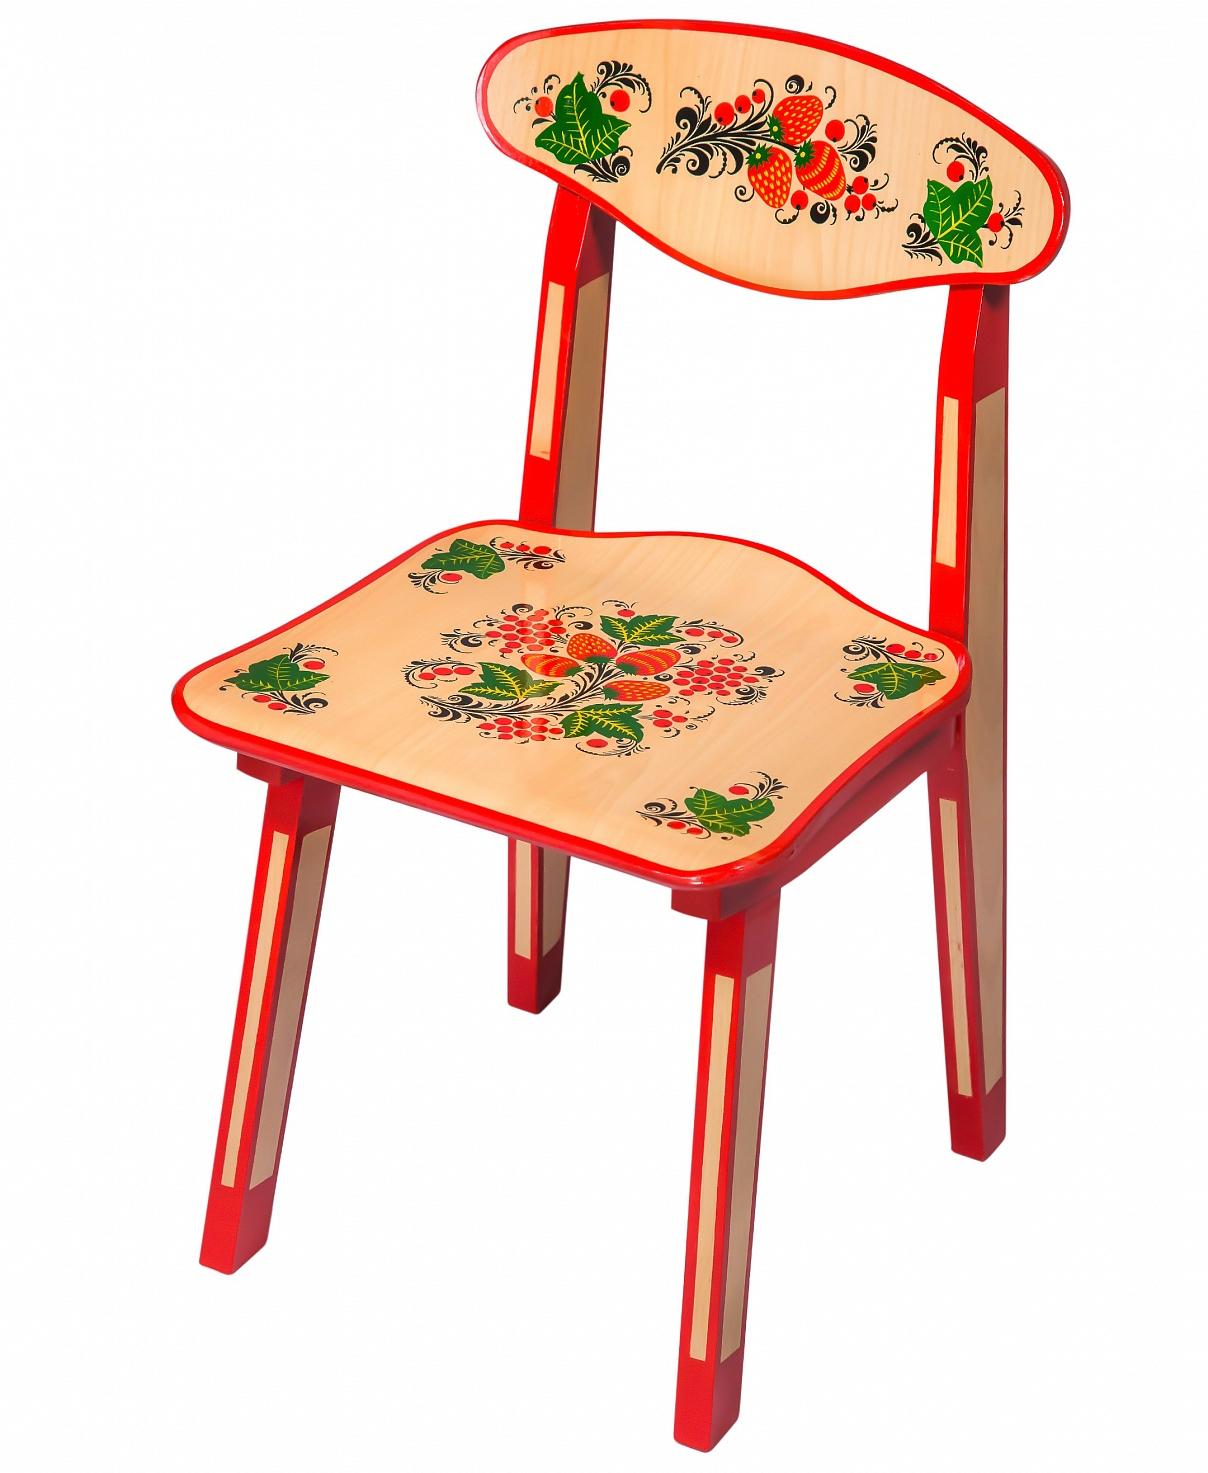 стол и стул для ребенка хохлома